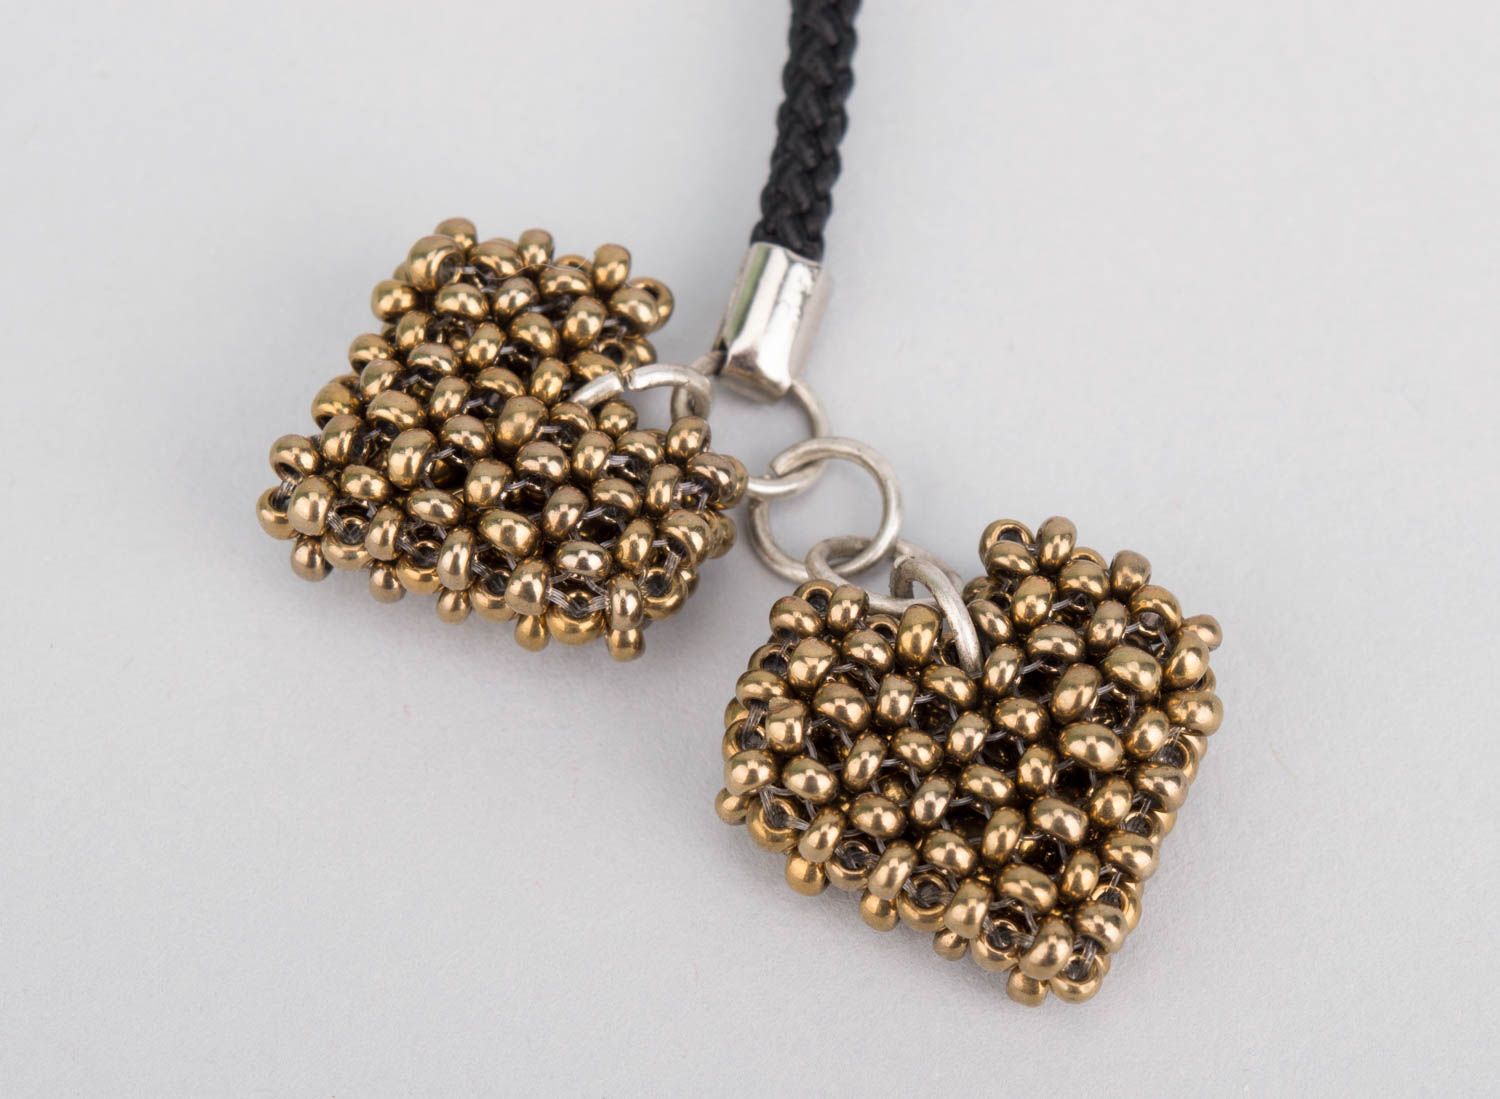 Handmade key ring designer keychains cell phone charm gift ideas for girls photo 2